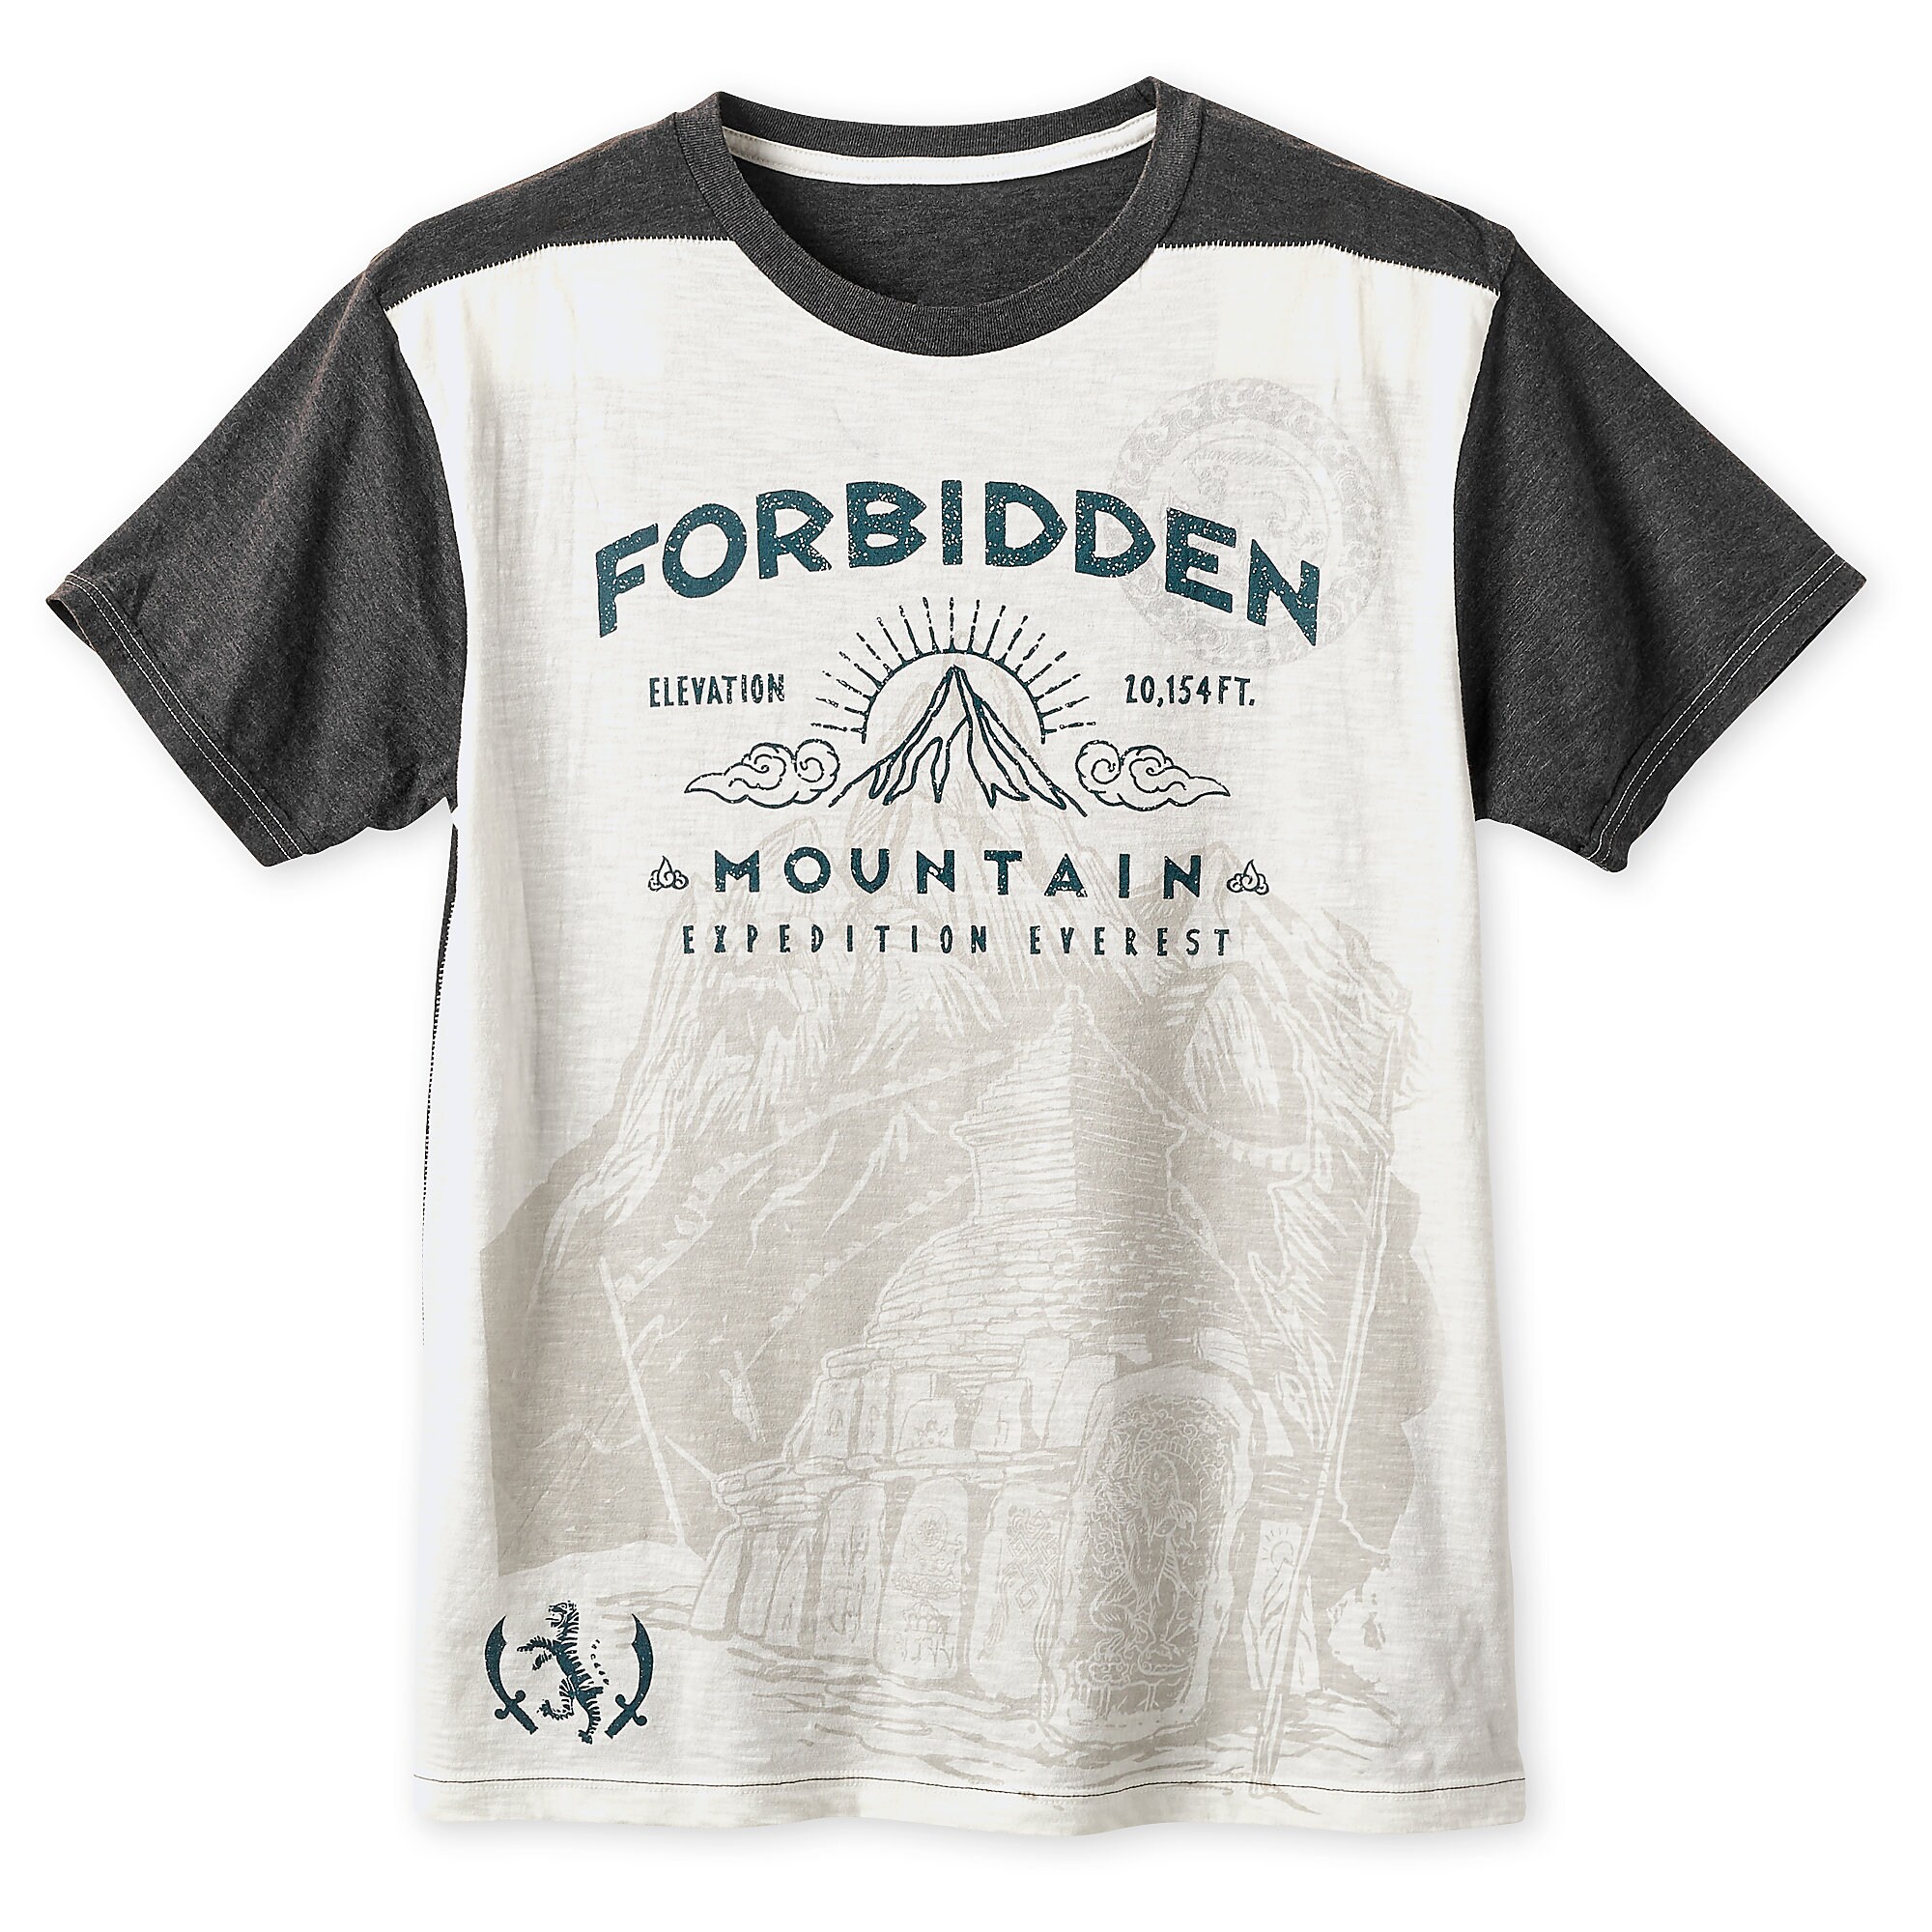 Expedition Everest Forbidden Mountain T-Shirt for Men